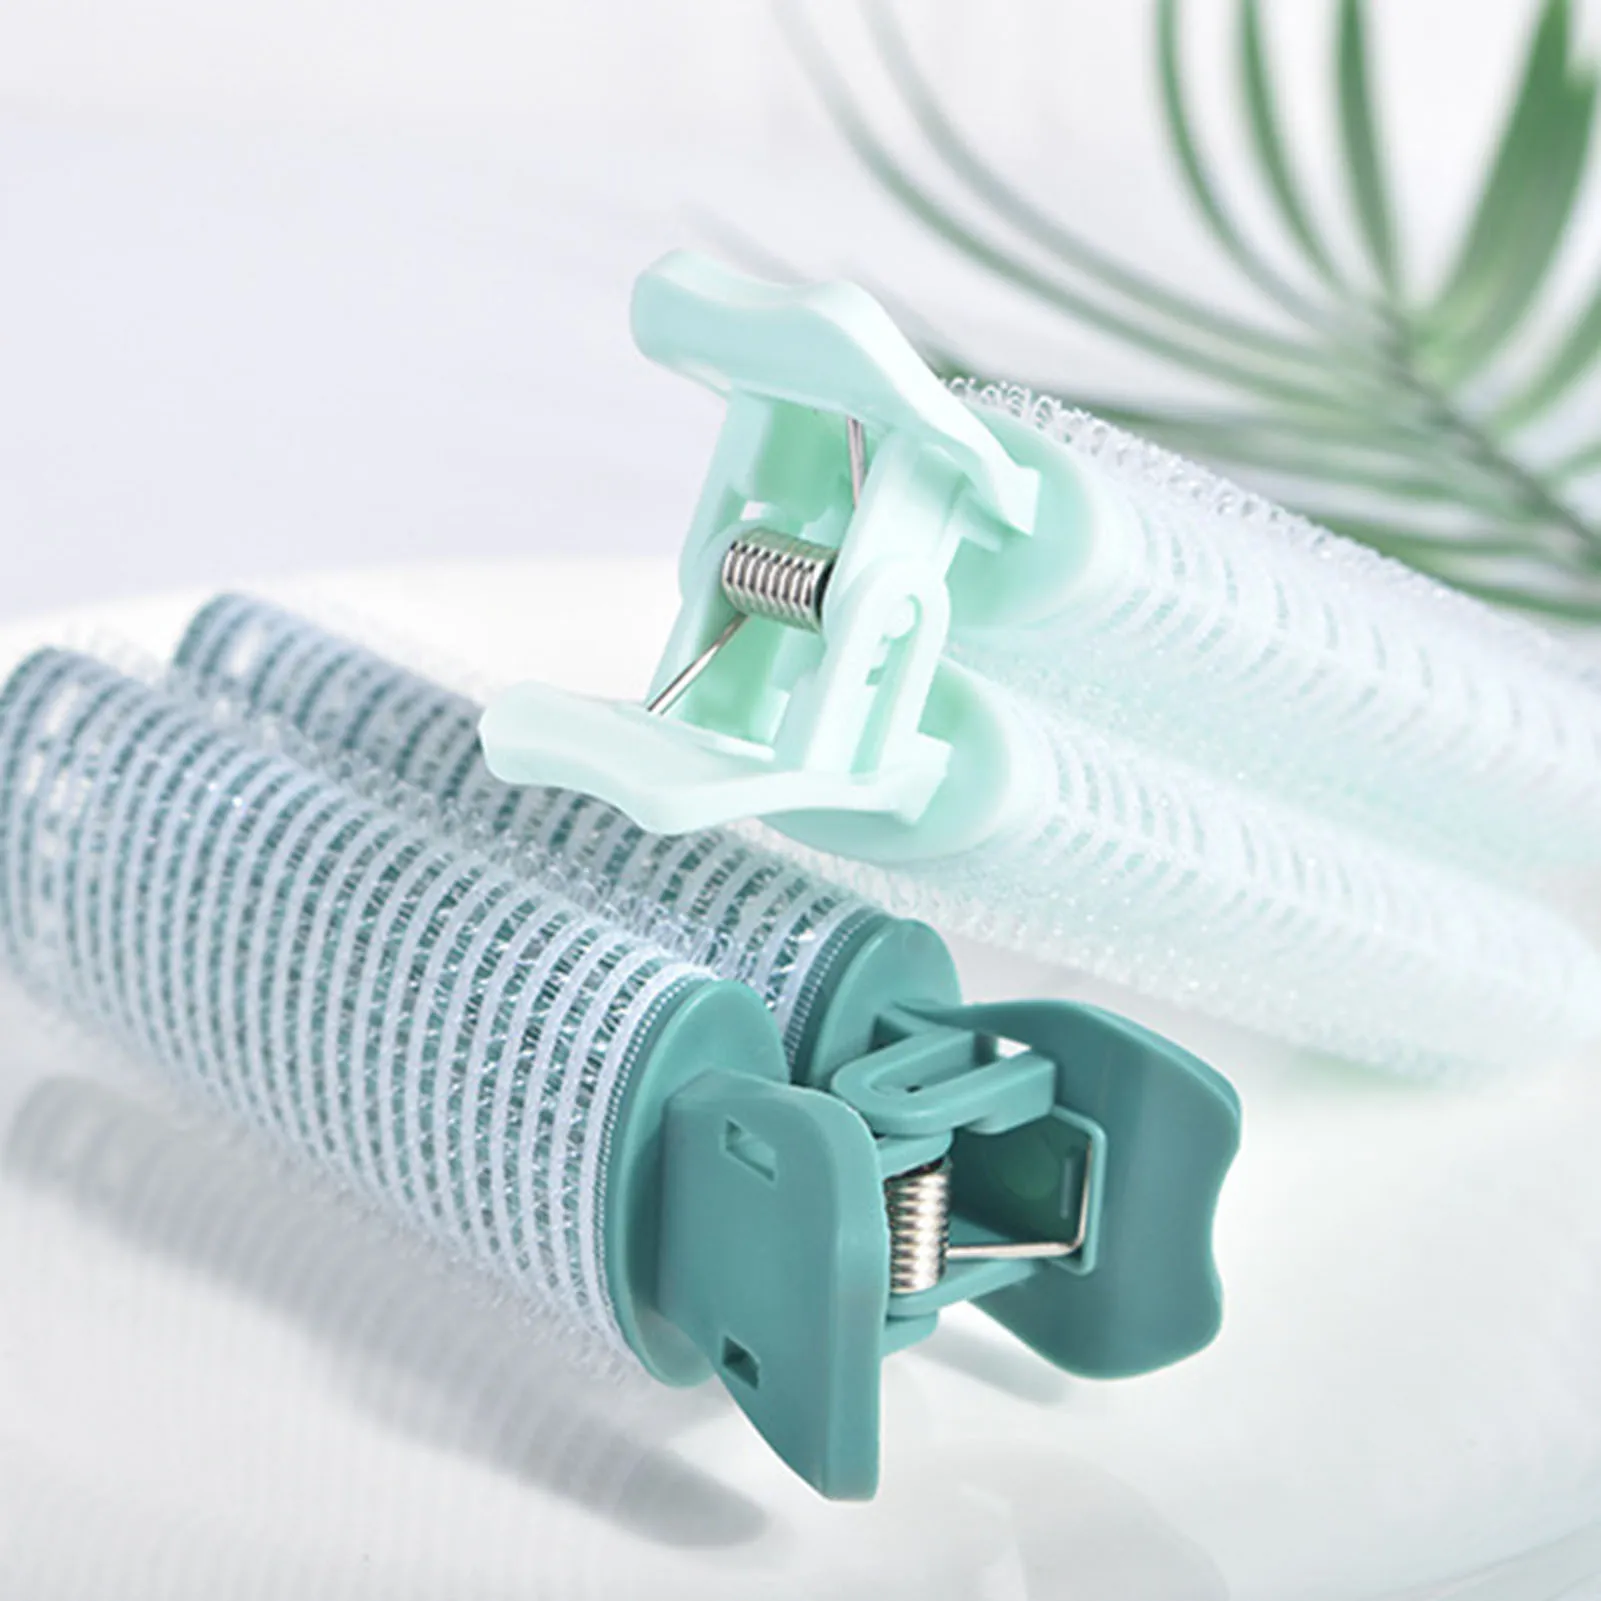 2pcs Velcro-Sticker Bangs Curler Self-adhesive Heatless Curlers Hair Styling Tool